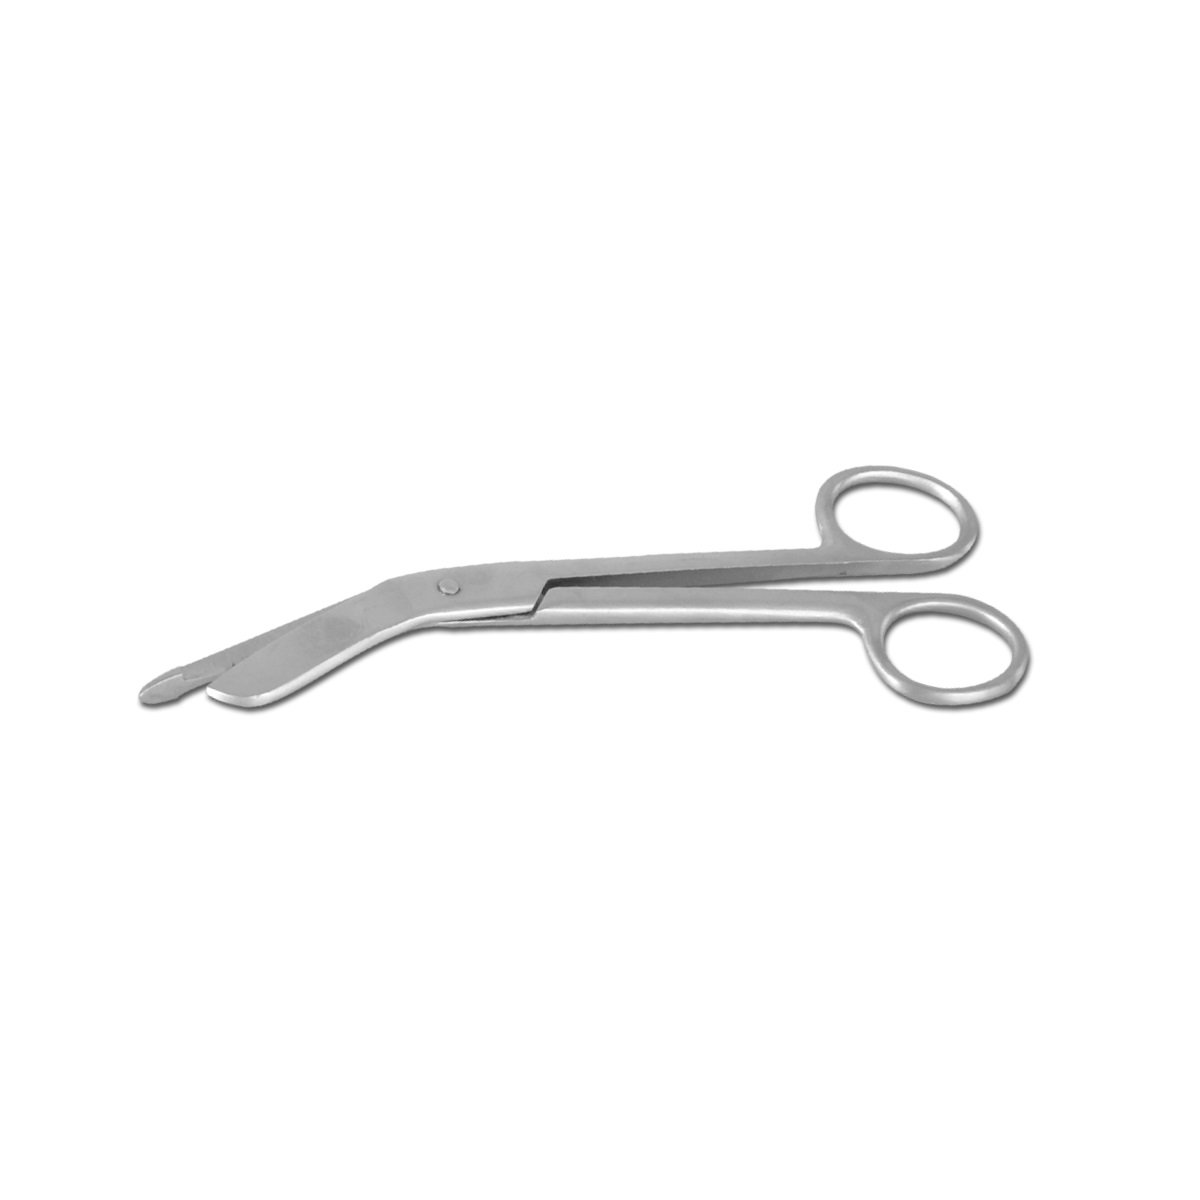 Bendage-Cutting-Scissor.jpg